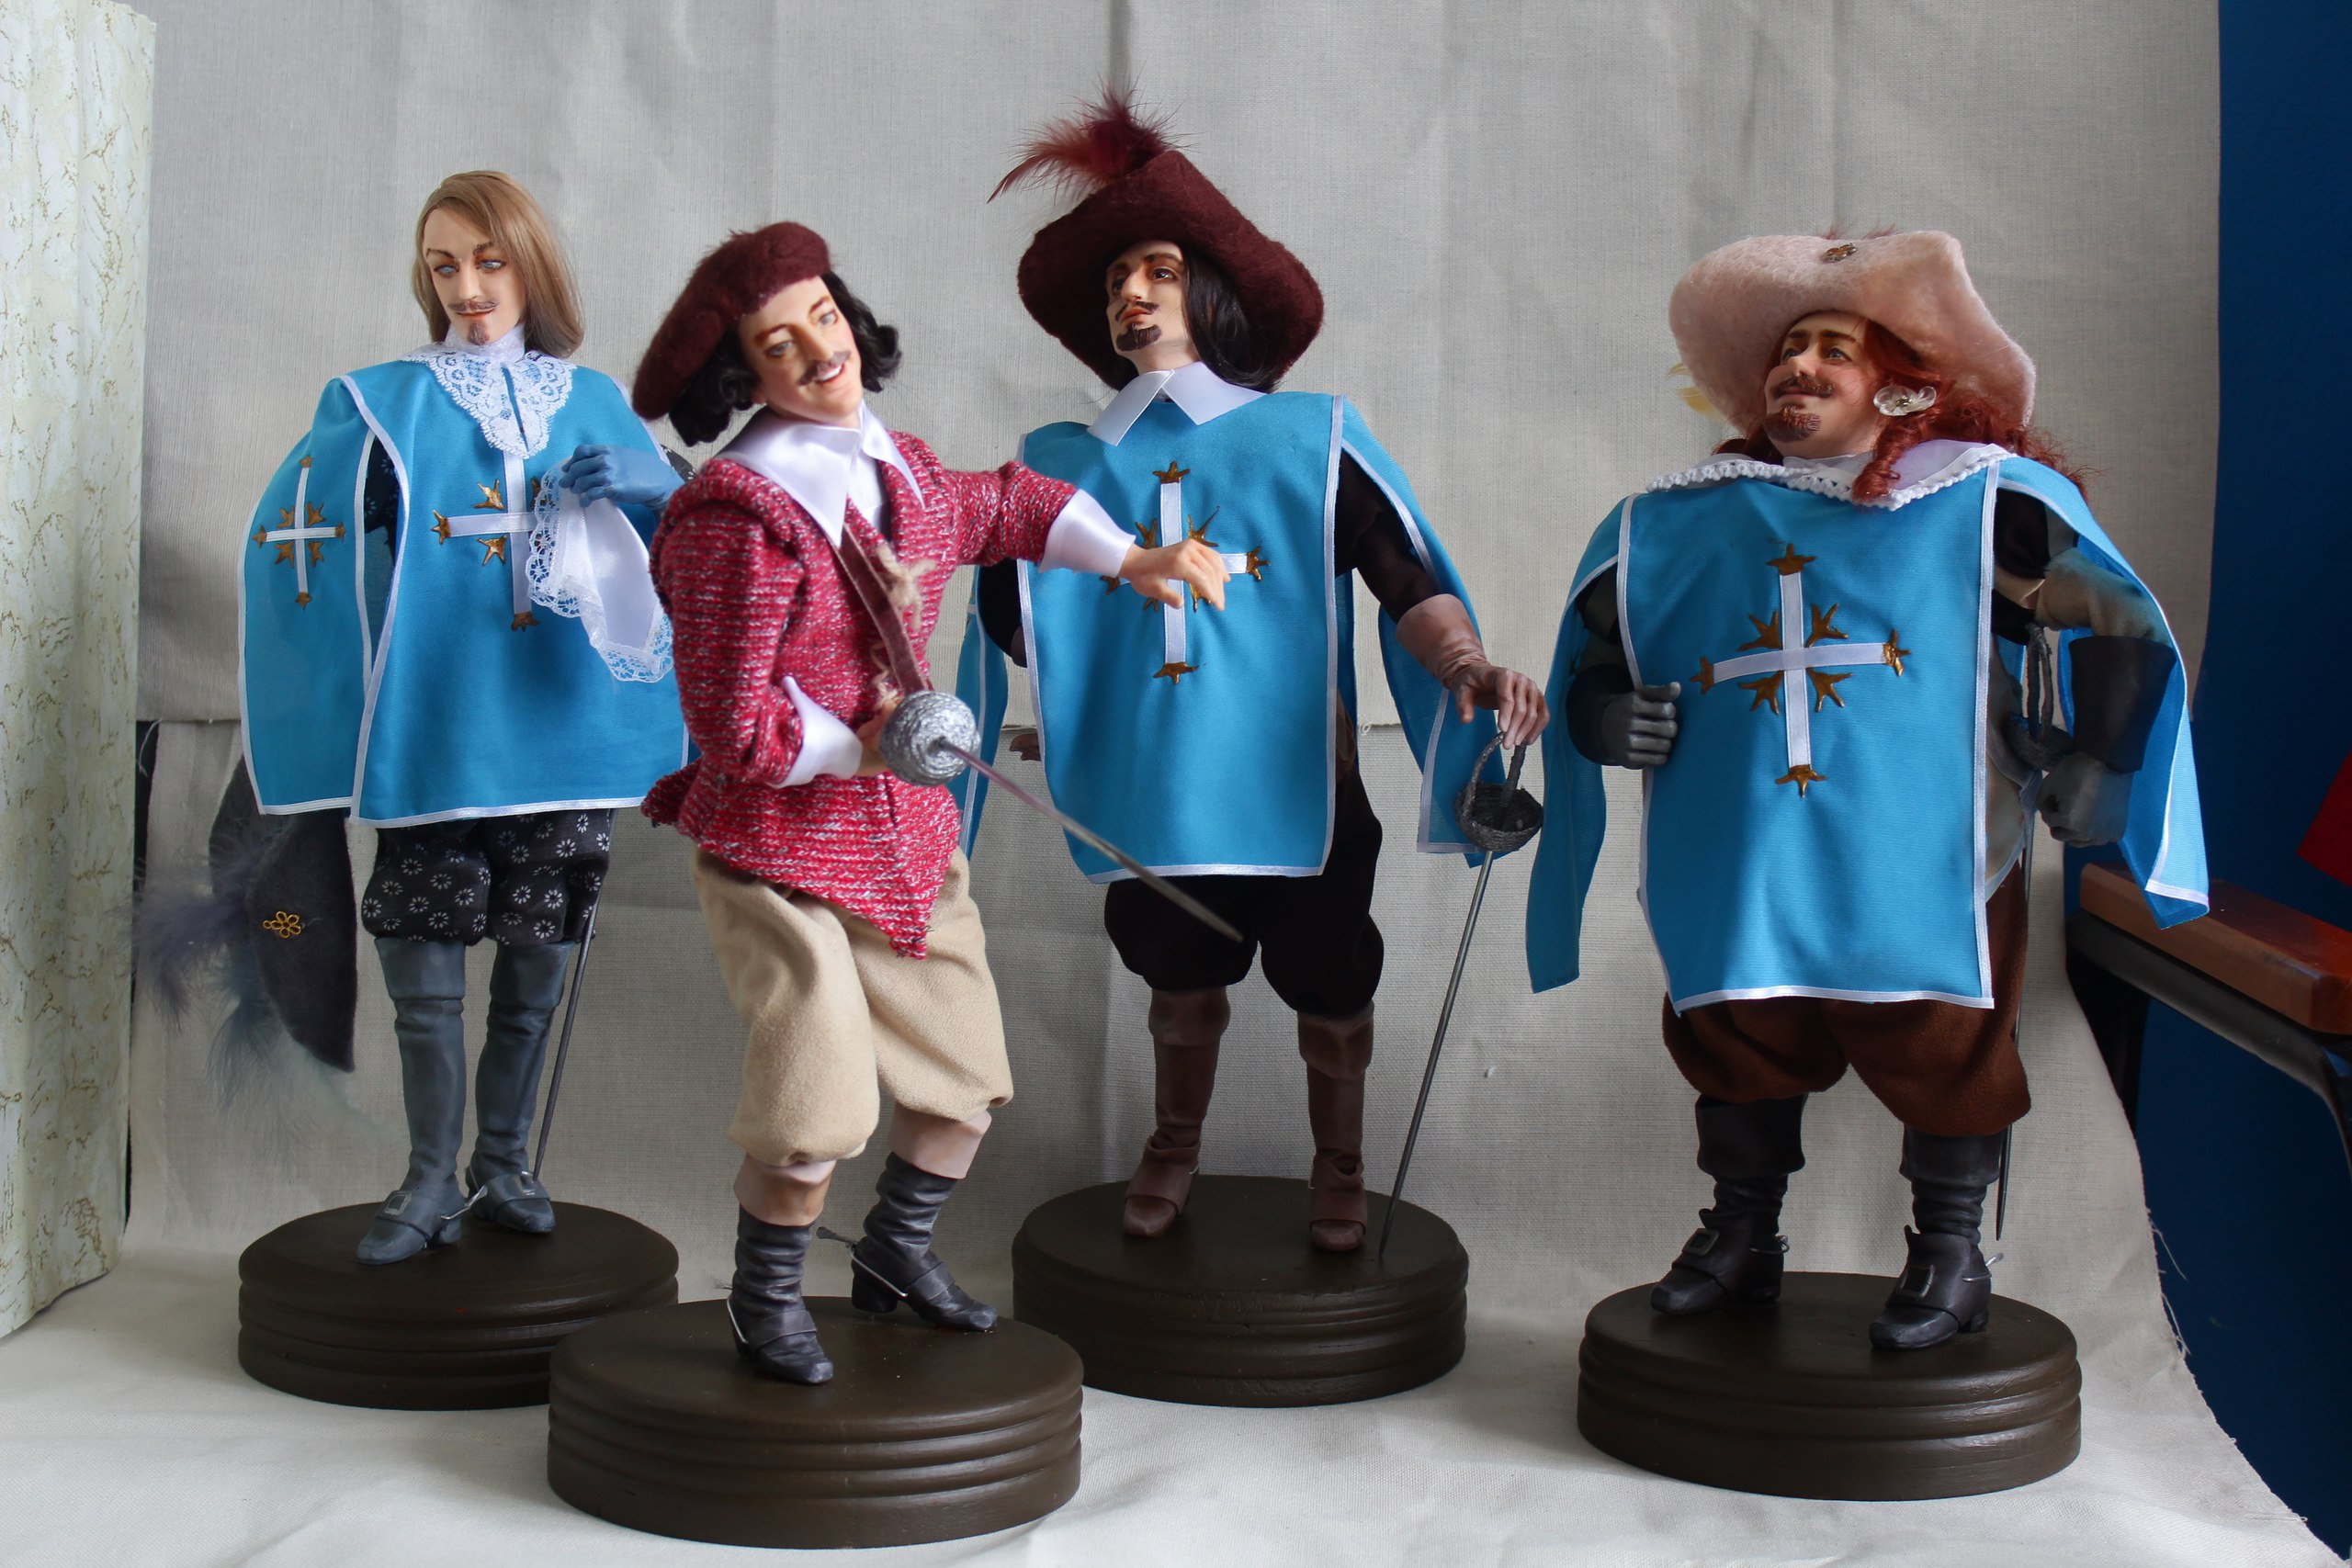 Три мушкетера купить билеты. Три мушкетера игра. Игрушки три мушкетера д Артаньян. Дартаньян и три мушкетёра фигурки. Атос Мушкетер.